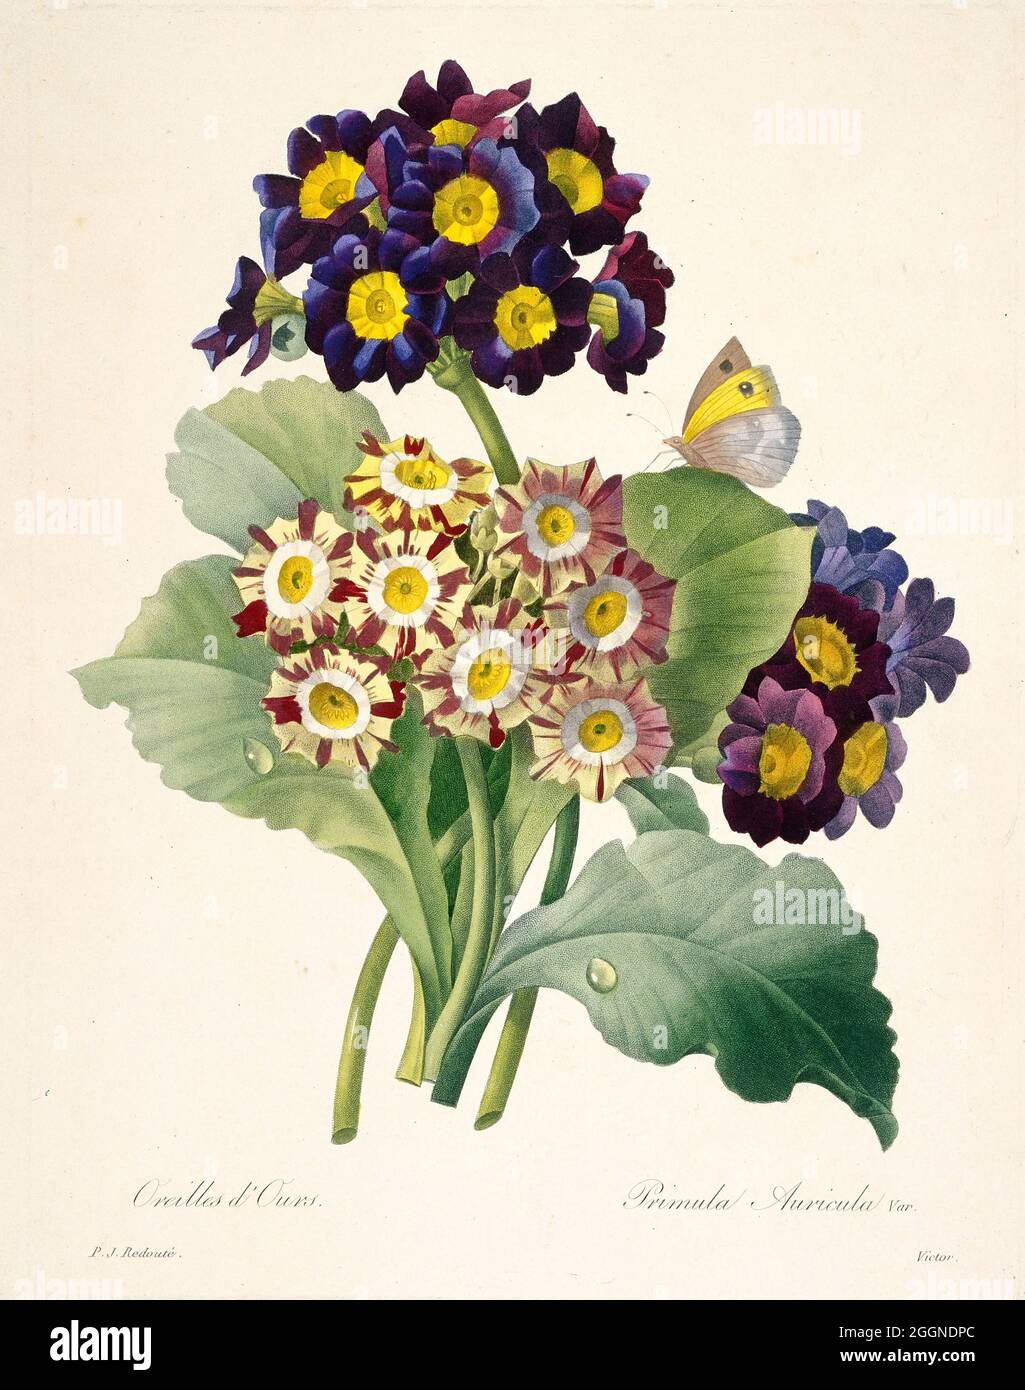 Primula auricula (Primroses). Museum: PRIVATE COLLECTION. Author: Pierre-Joseph Redouté. Stock Photo